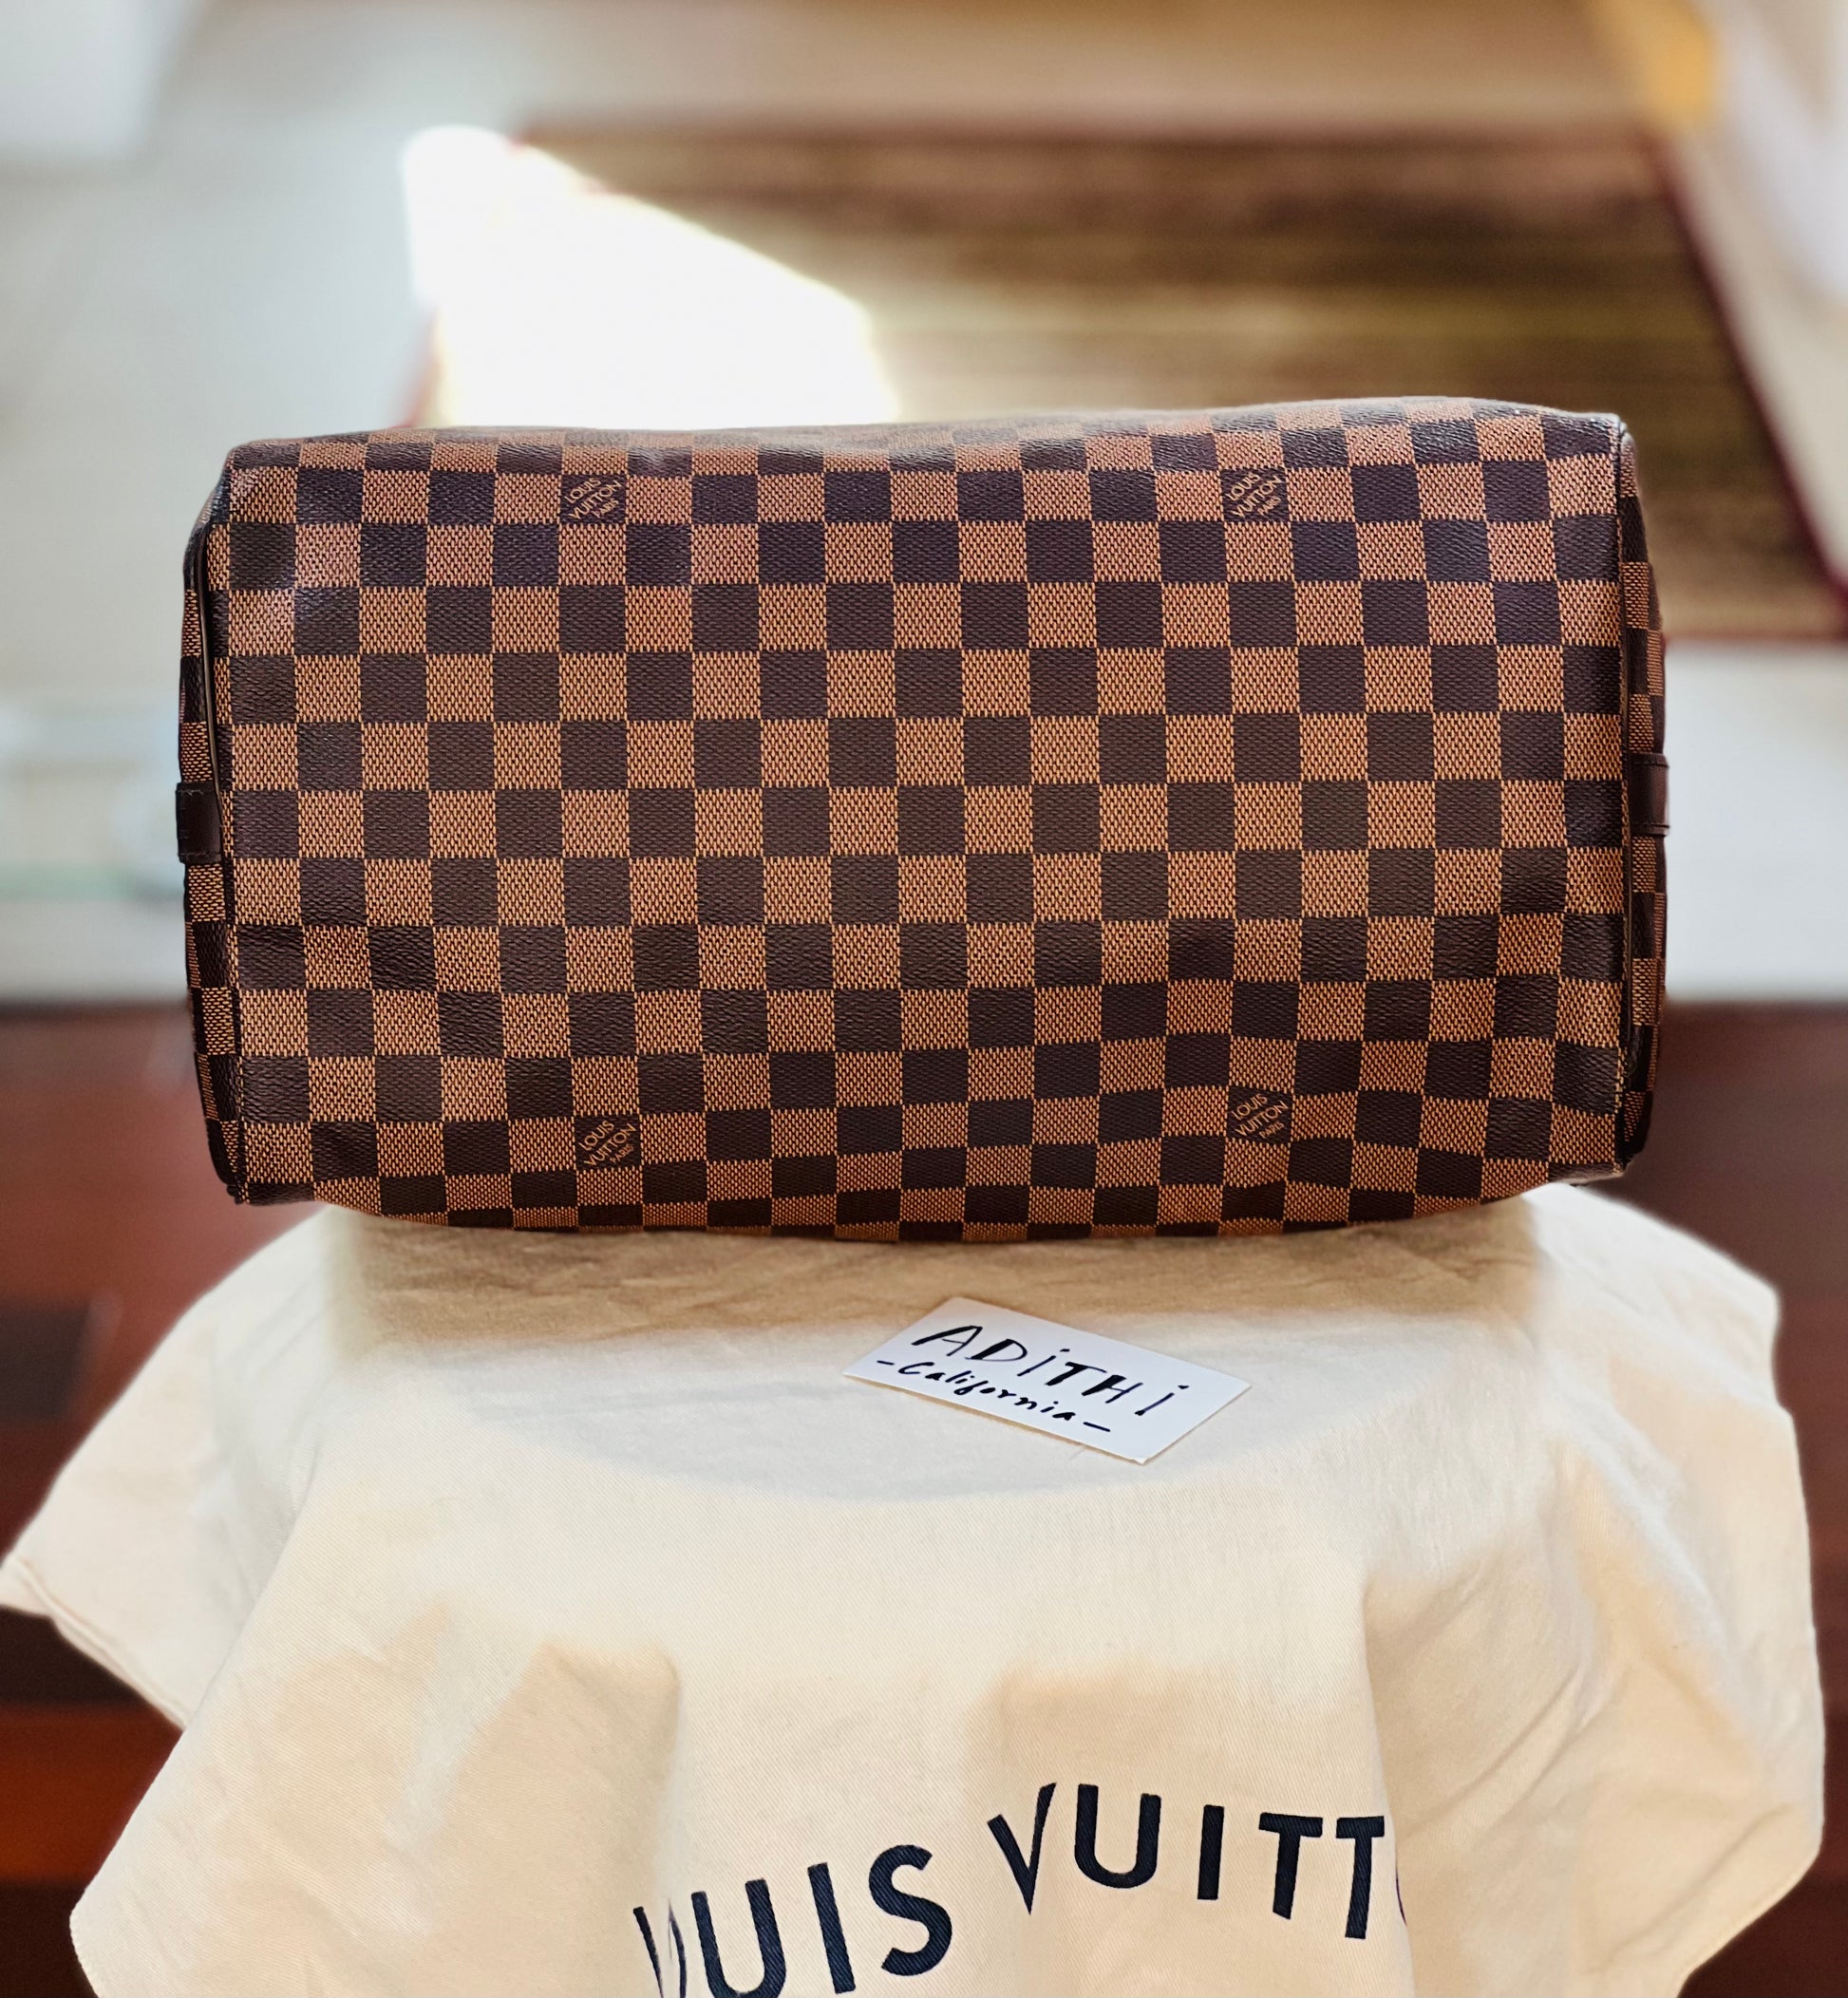 Shop online with Louis Vuitton Damier Ebene Speedy Bandouliere 35